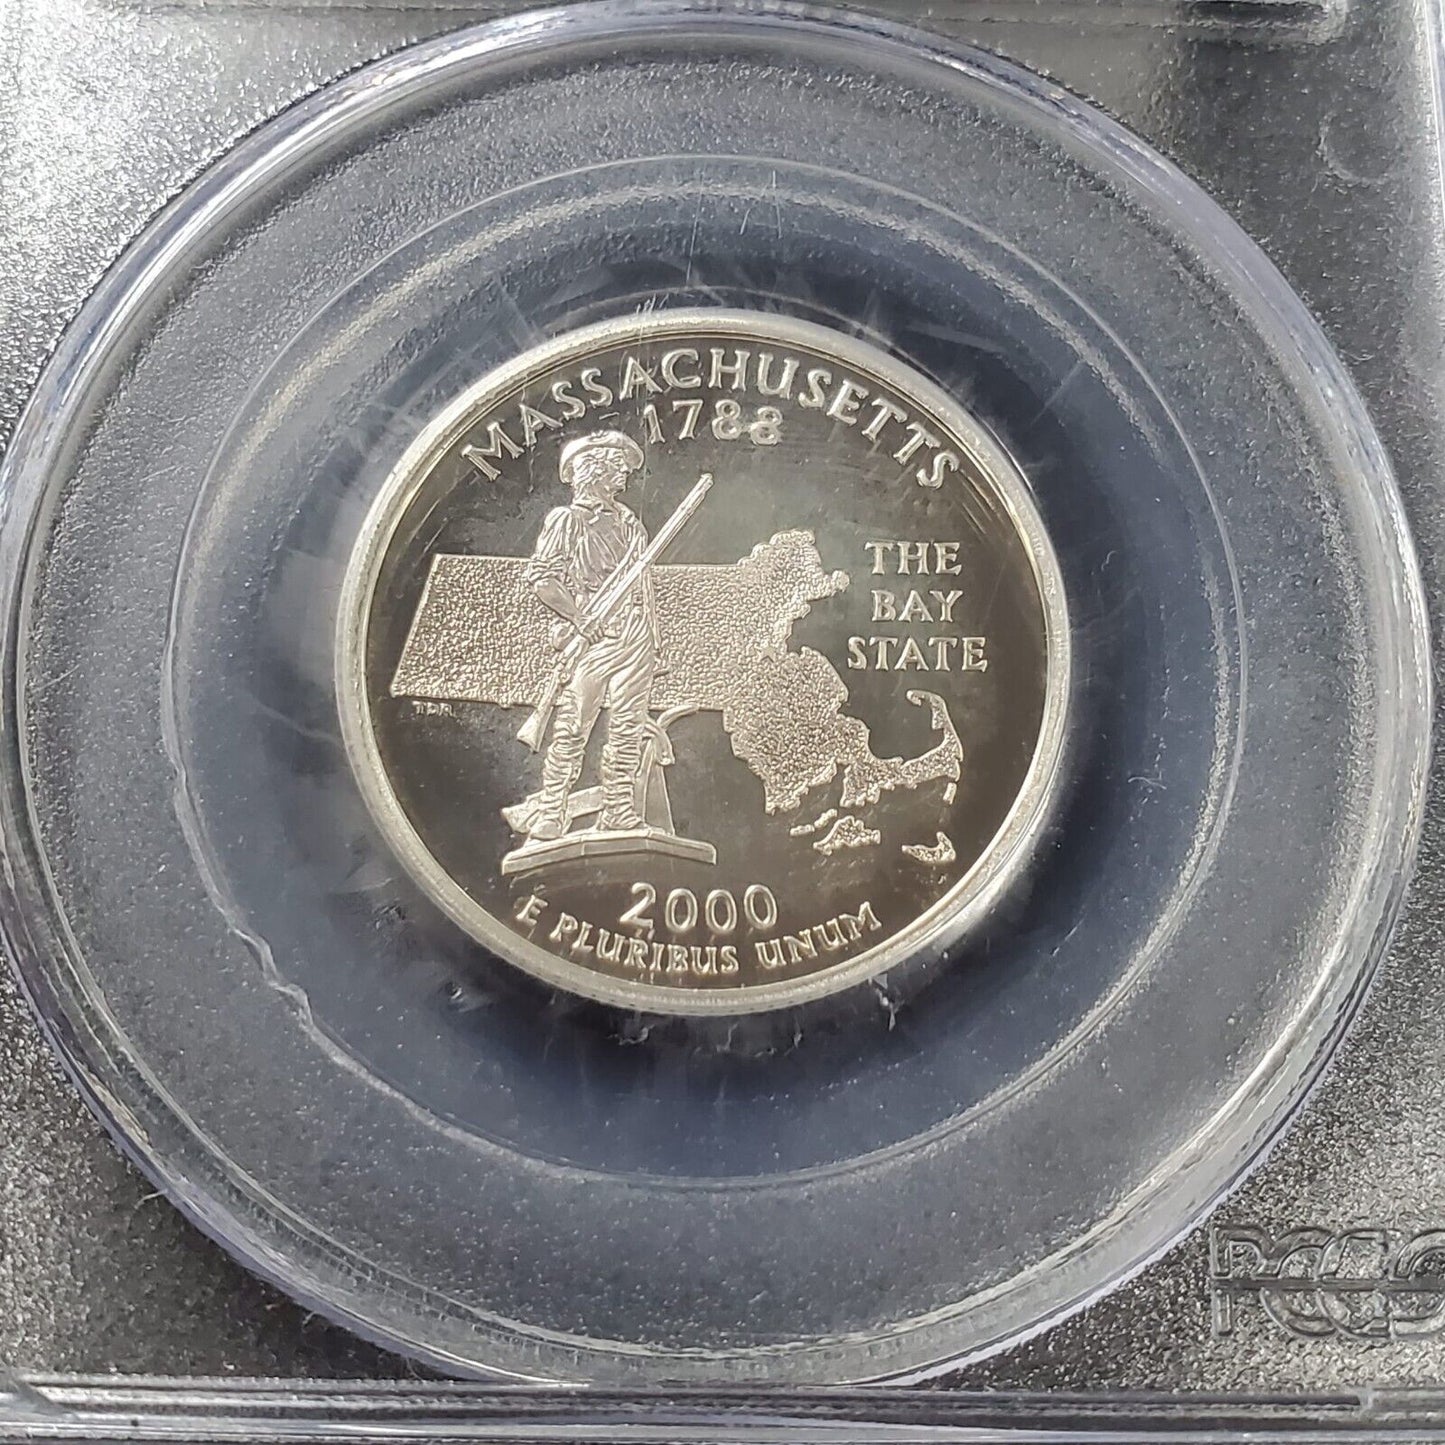 2001 S MASSACHUSETTS State Quarter Coin PCGS PR69 DCAM UCAM San Francisco Mint